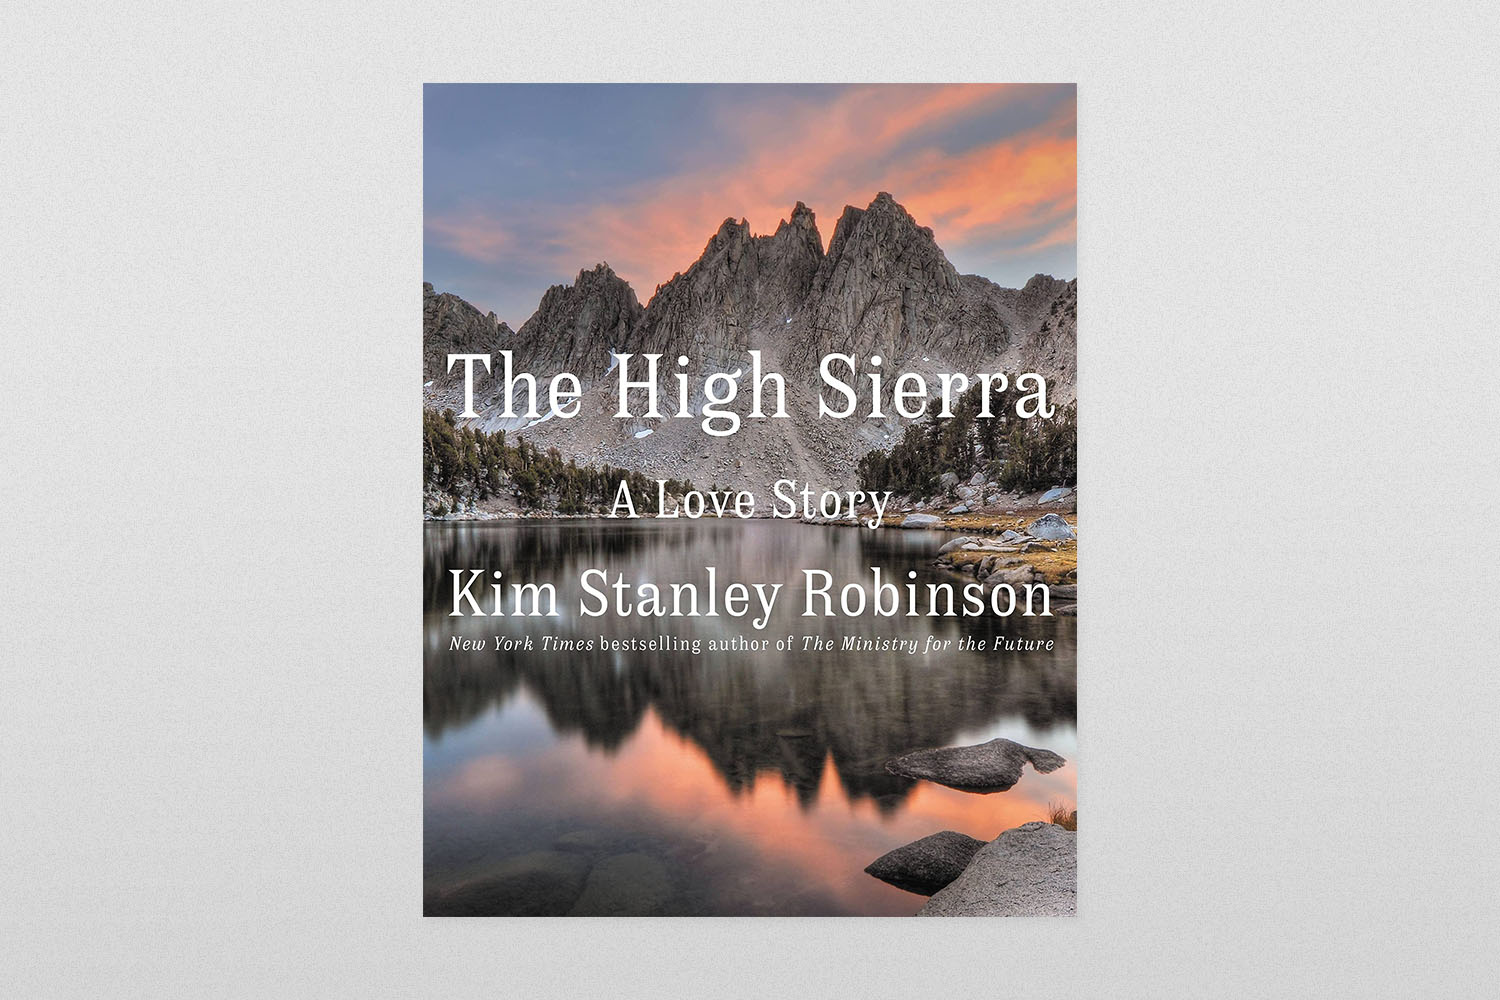 The High Sierra- A Love Story by Kim Stanley Robinson